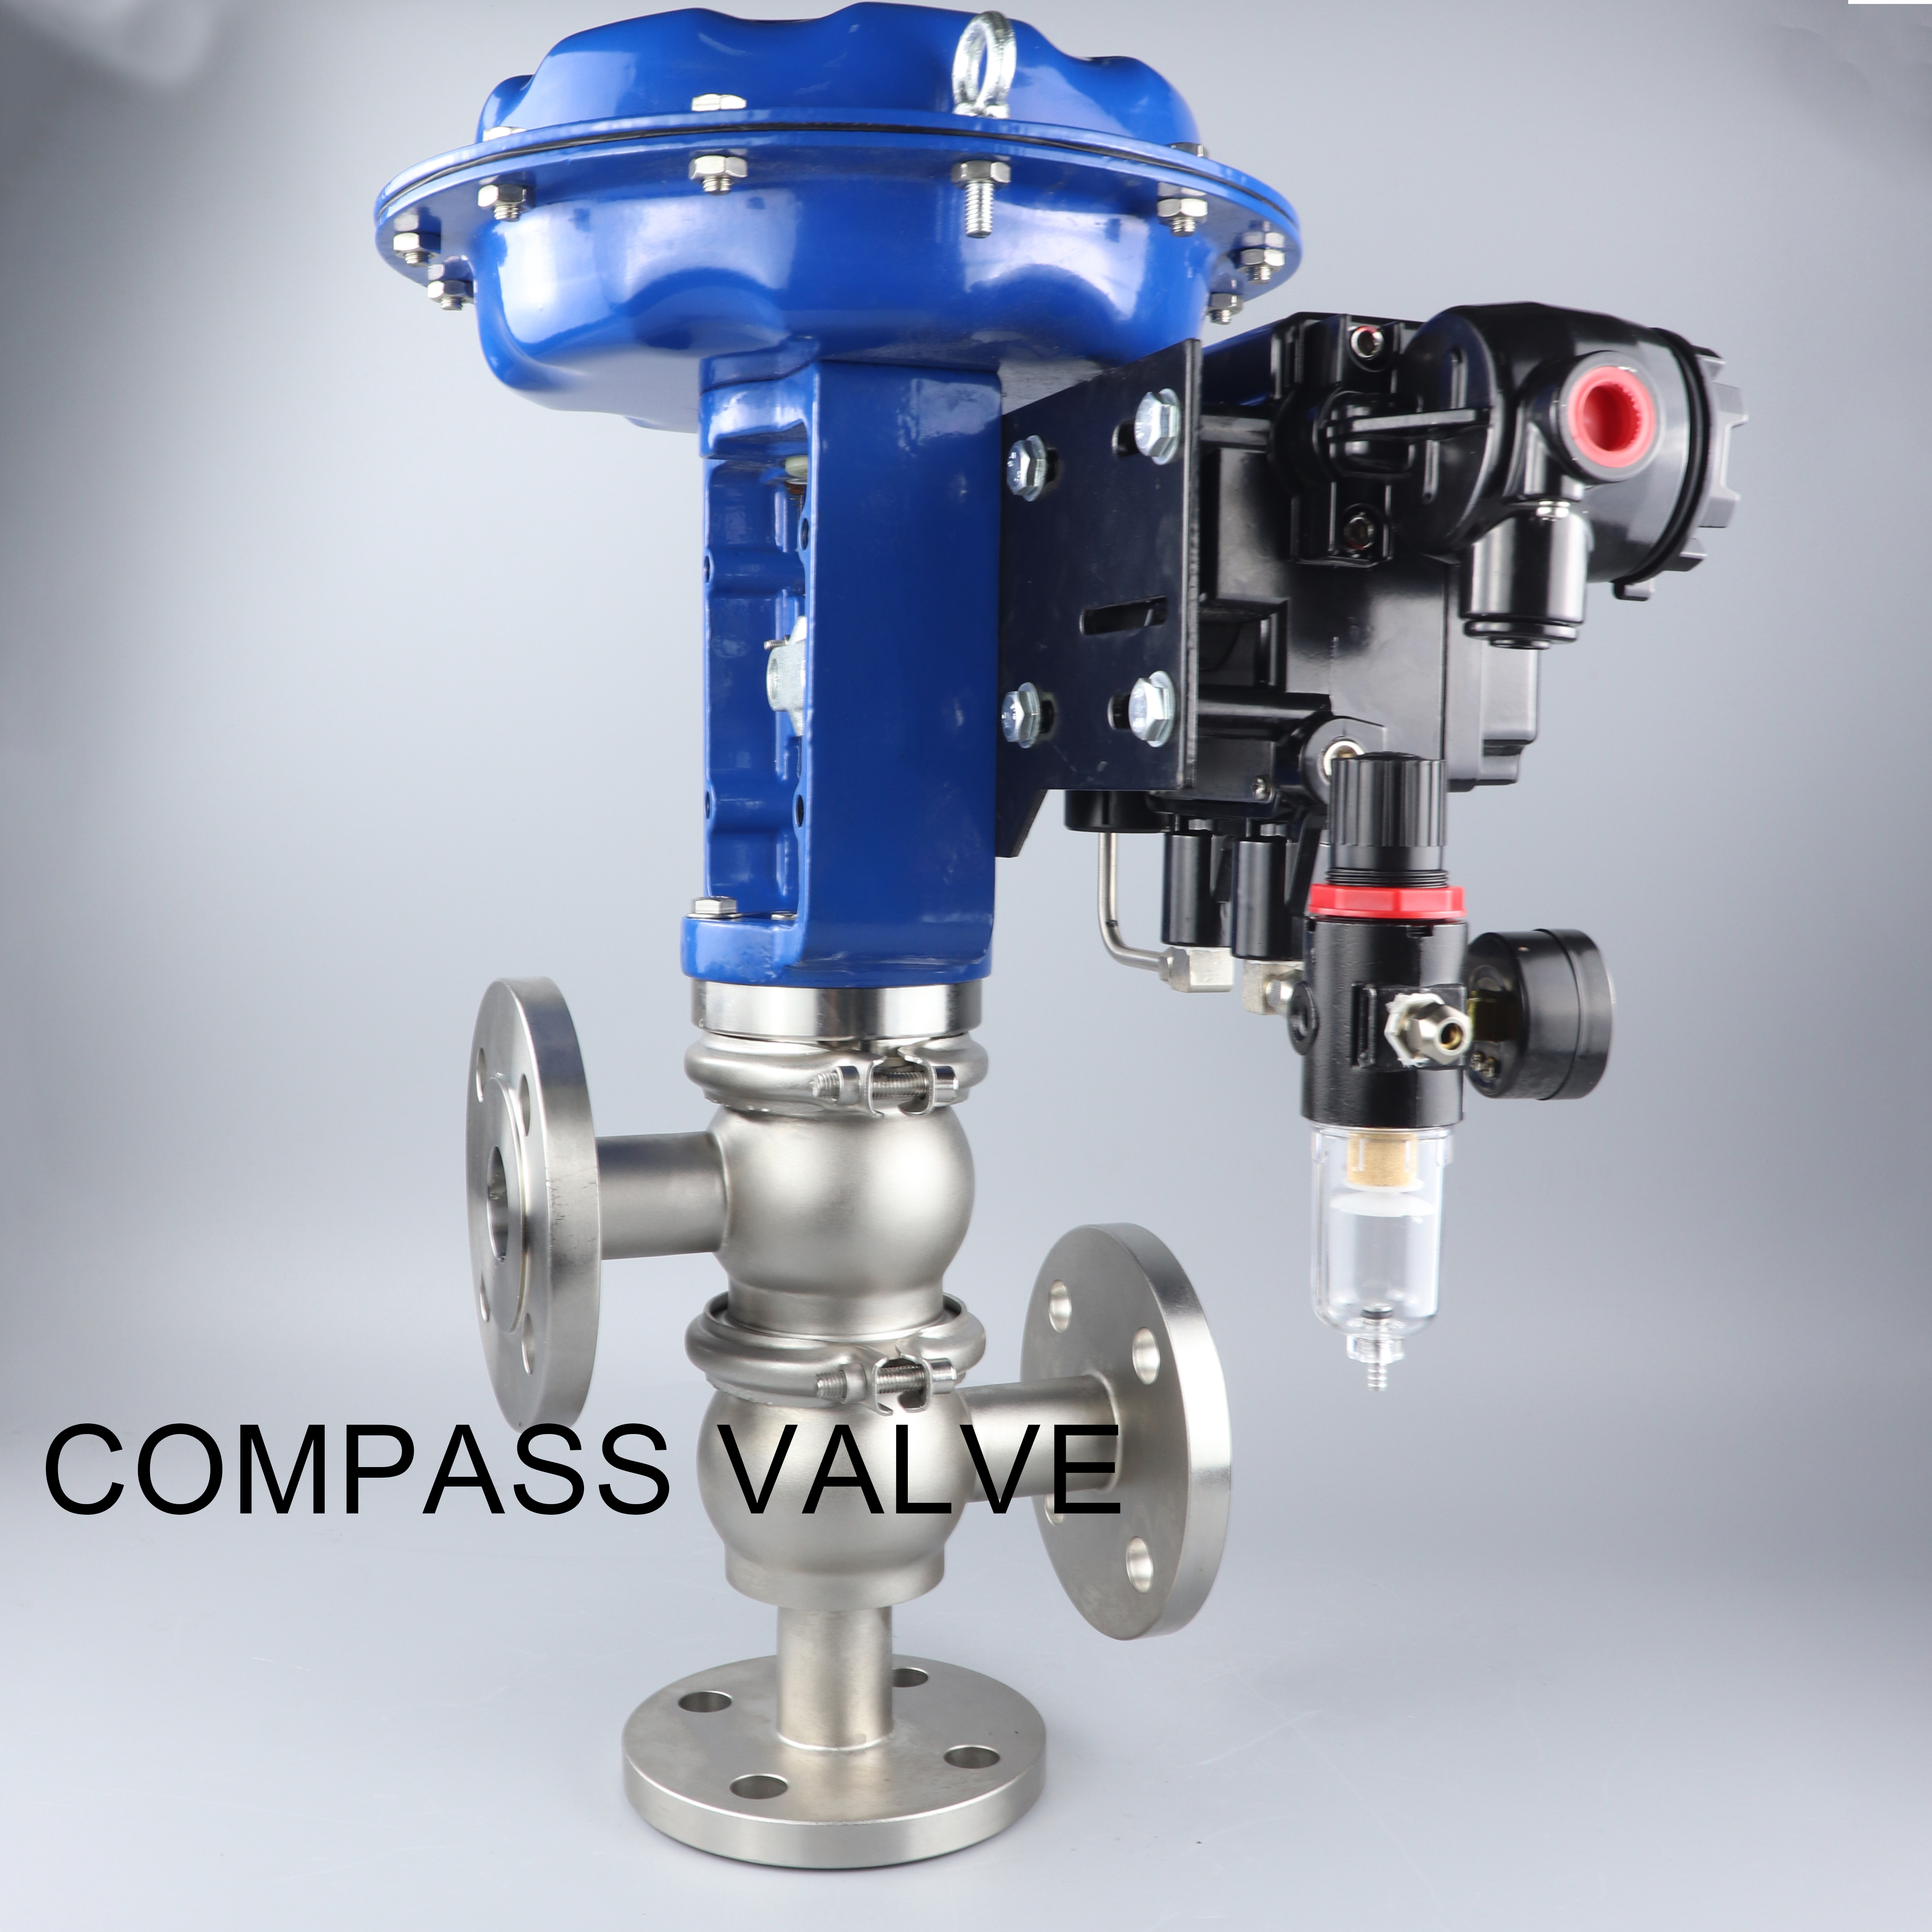 sanitary flow control valve, sanitary manual flow control valve, sanitary flow control valves